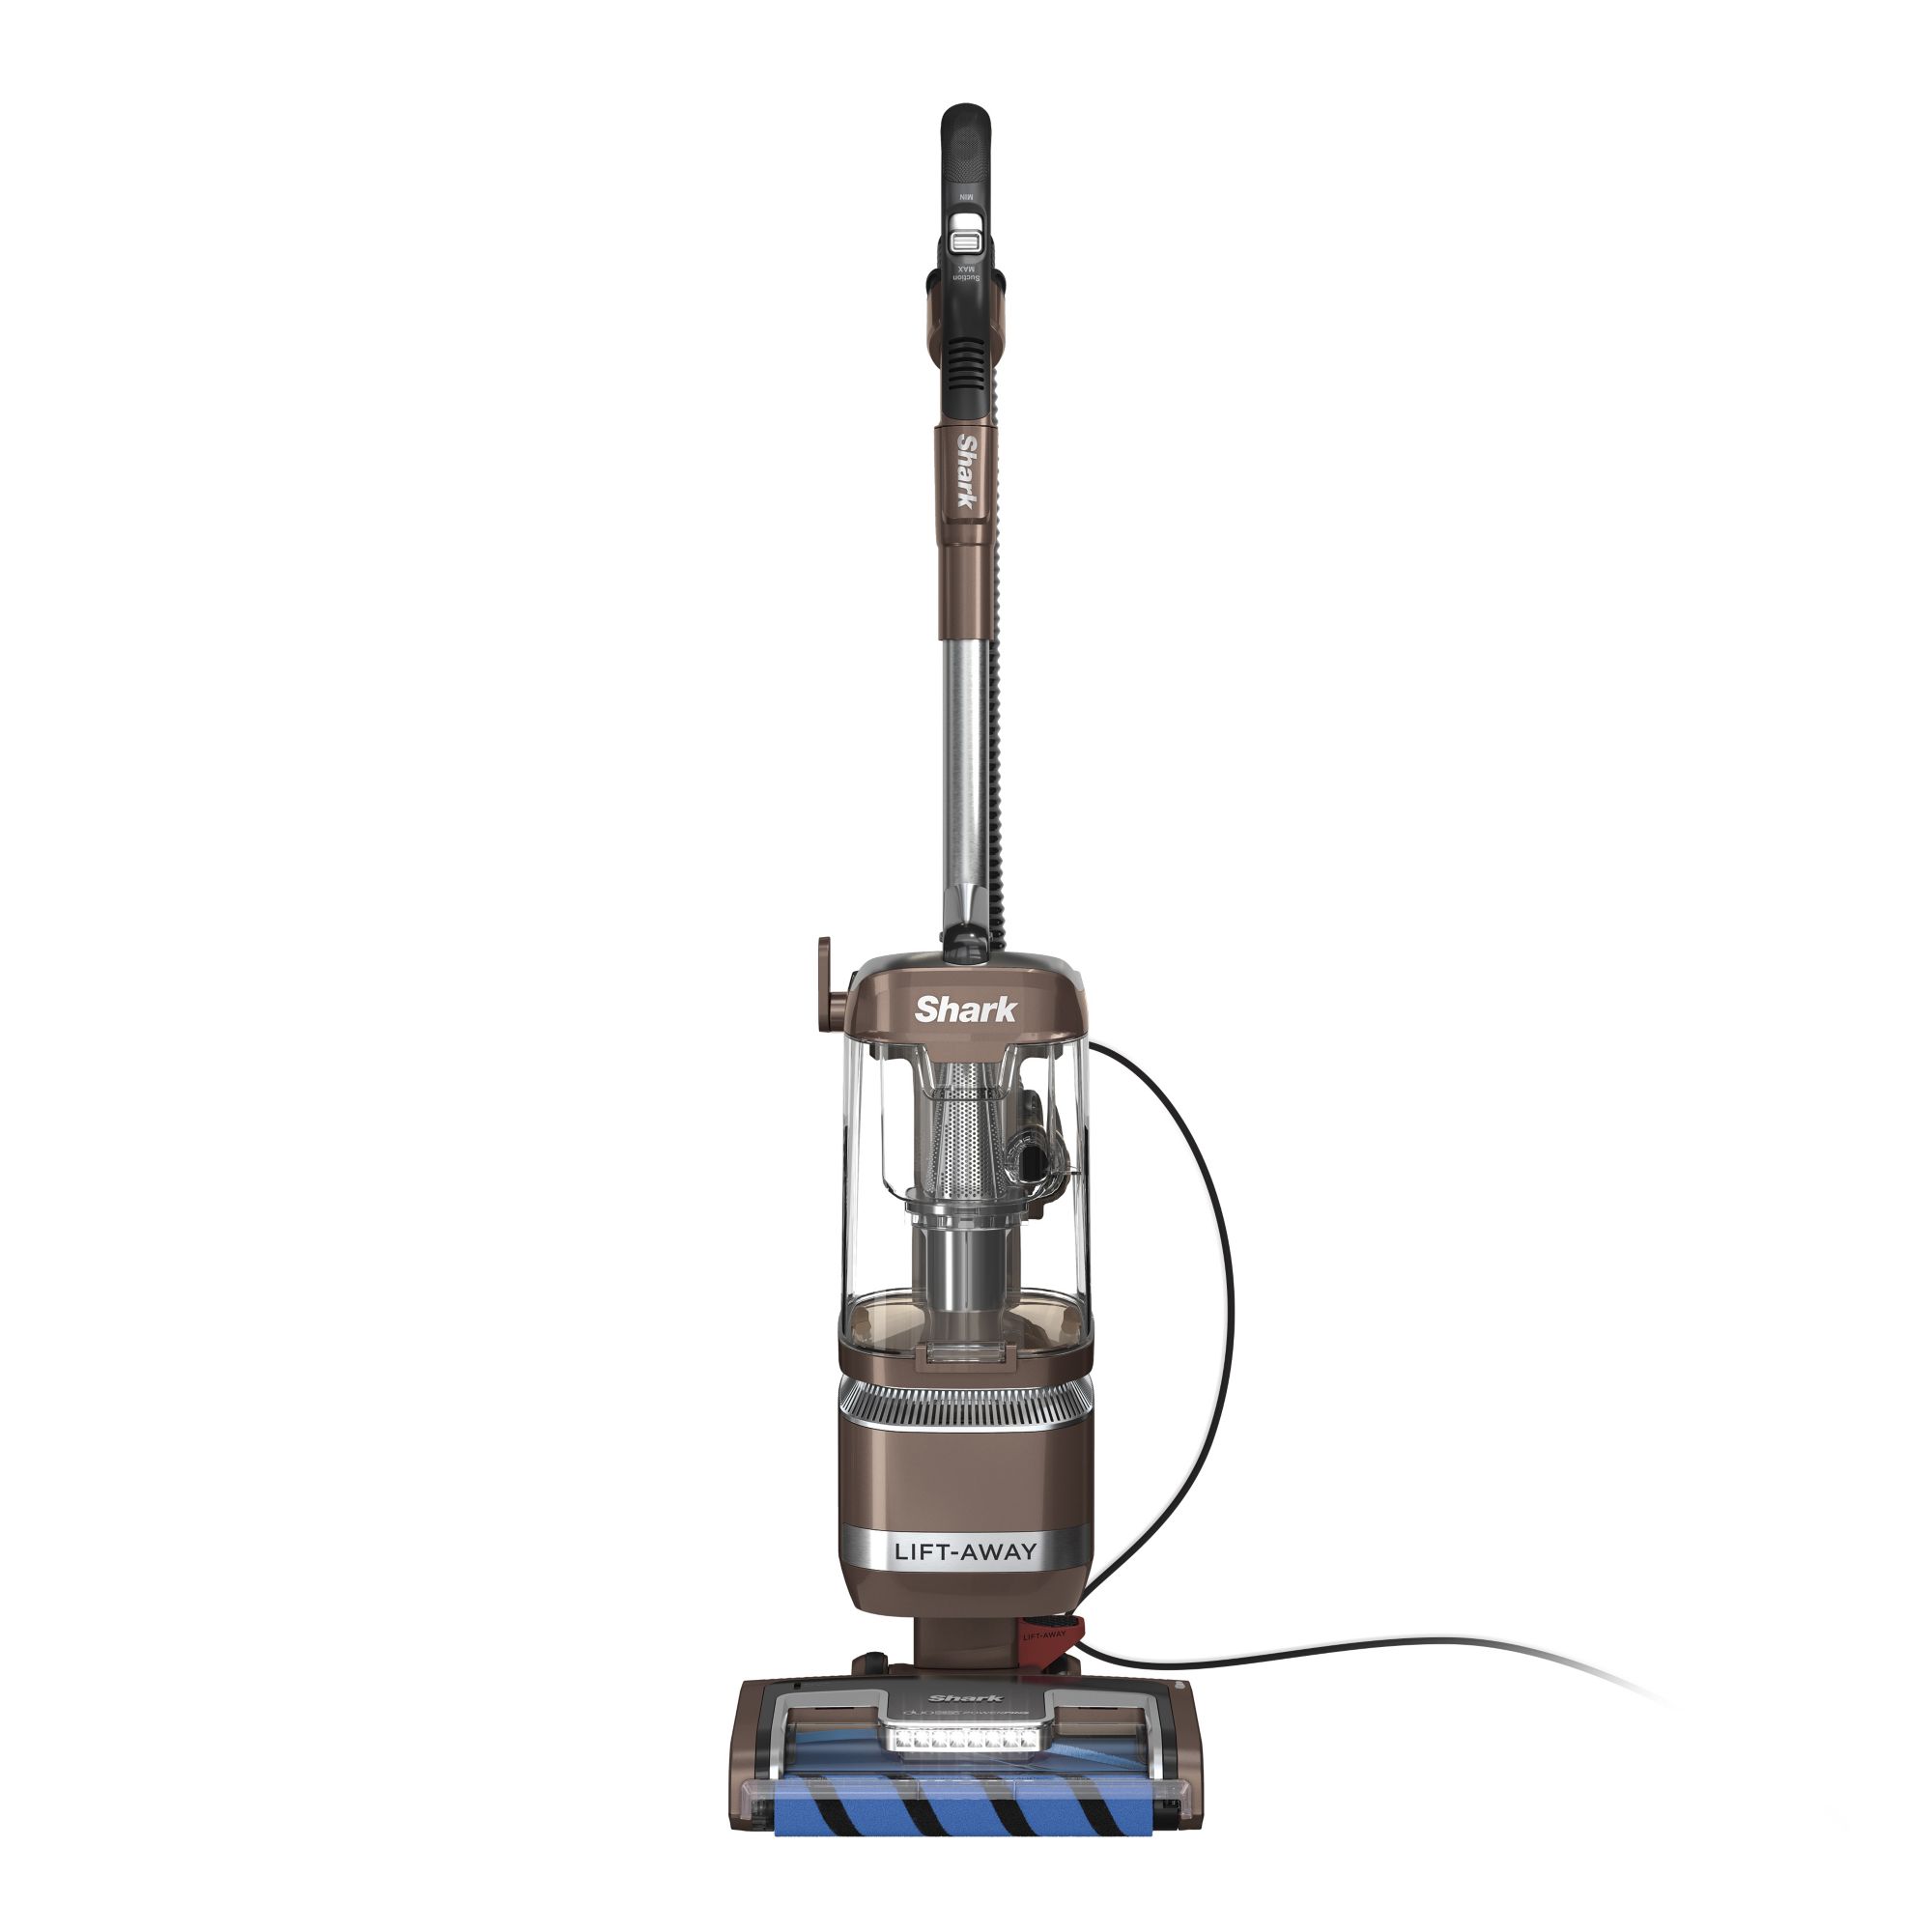 Shark Rotator Pet Pro Lift-Away ADV DuoClean PowerFins Upright Vacuum